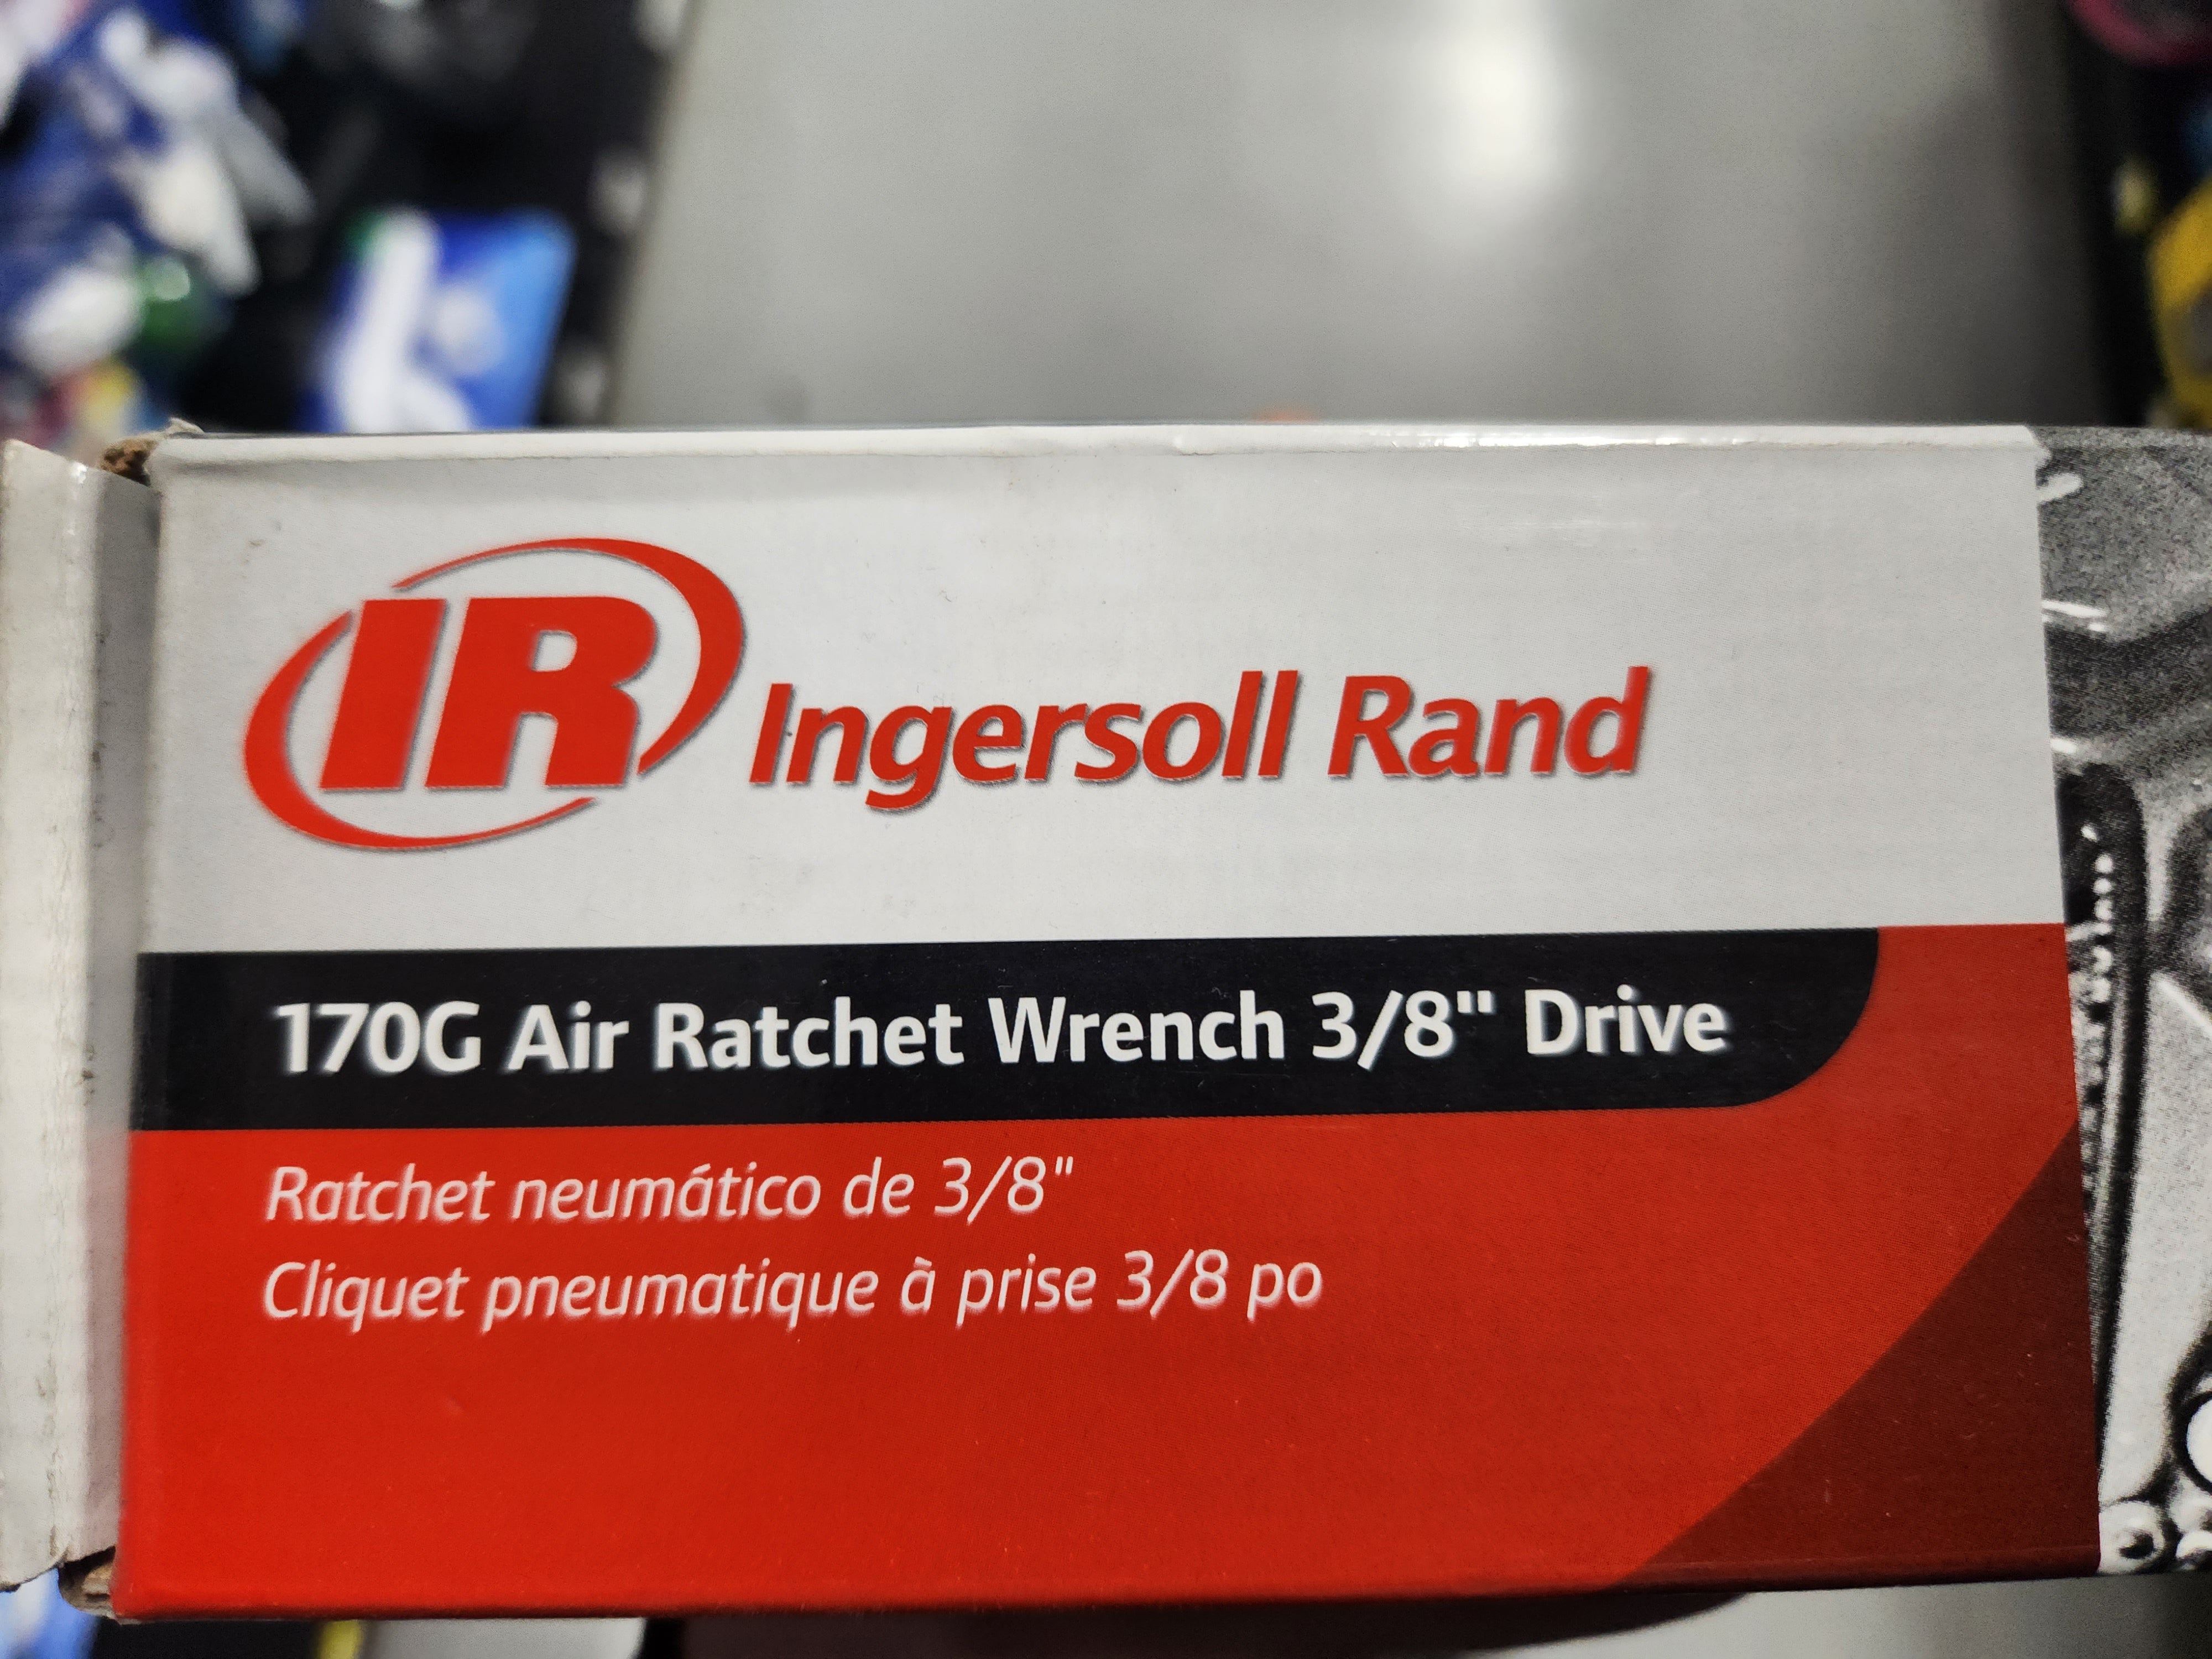 Ingersoll Rand 170G Edge Series 3/8” Drive Air Ratchet Wrench, 55 ft lbs Max Torque Output, 170 RPM, Comfort Grip, Lightweight, Compact, Black